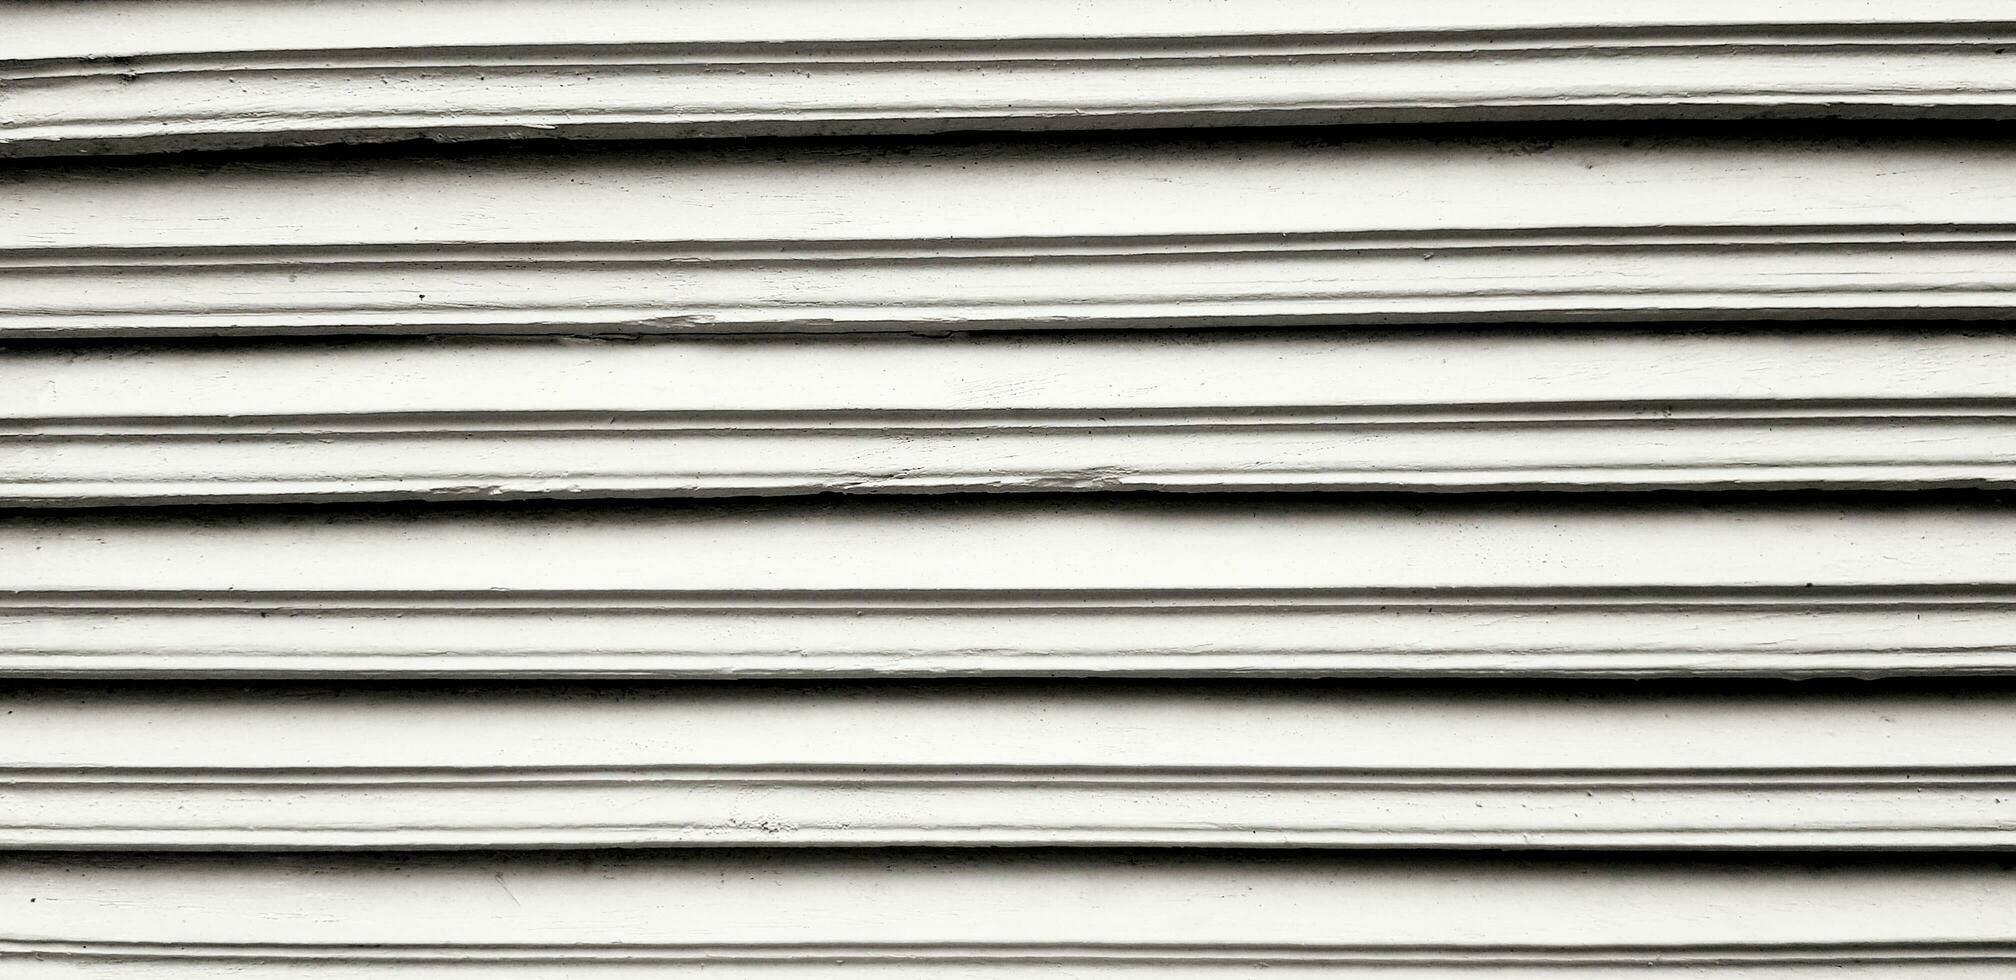 cerca arriba línea modelo de gris o gris de madera puerta para antecedentes en negro y blanco tono foto